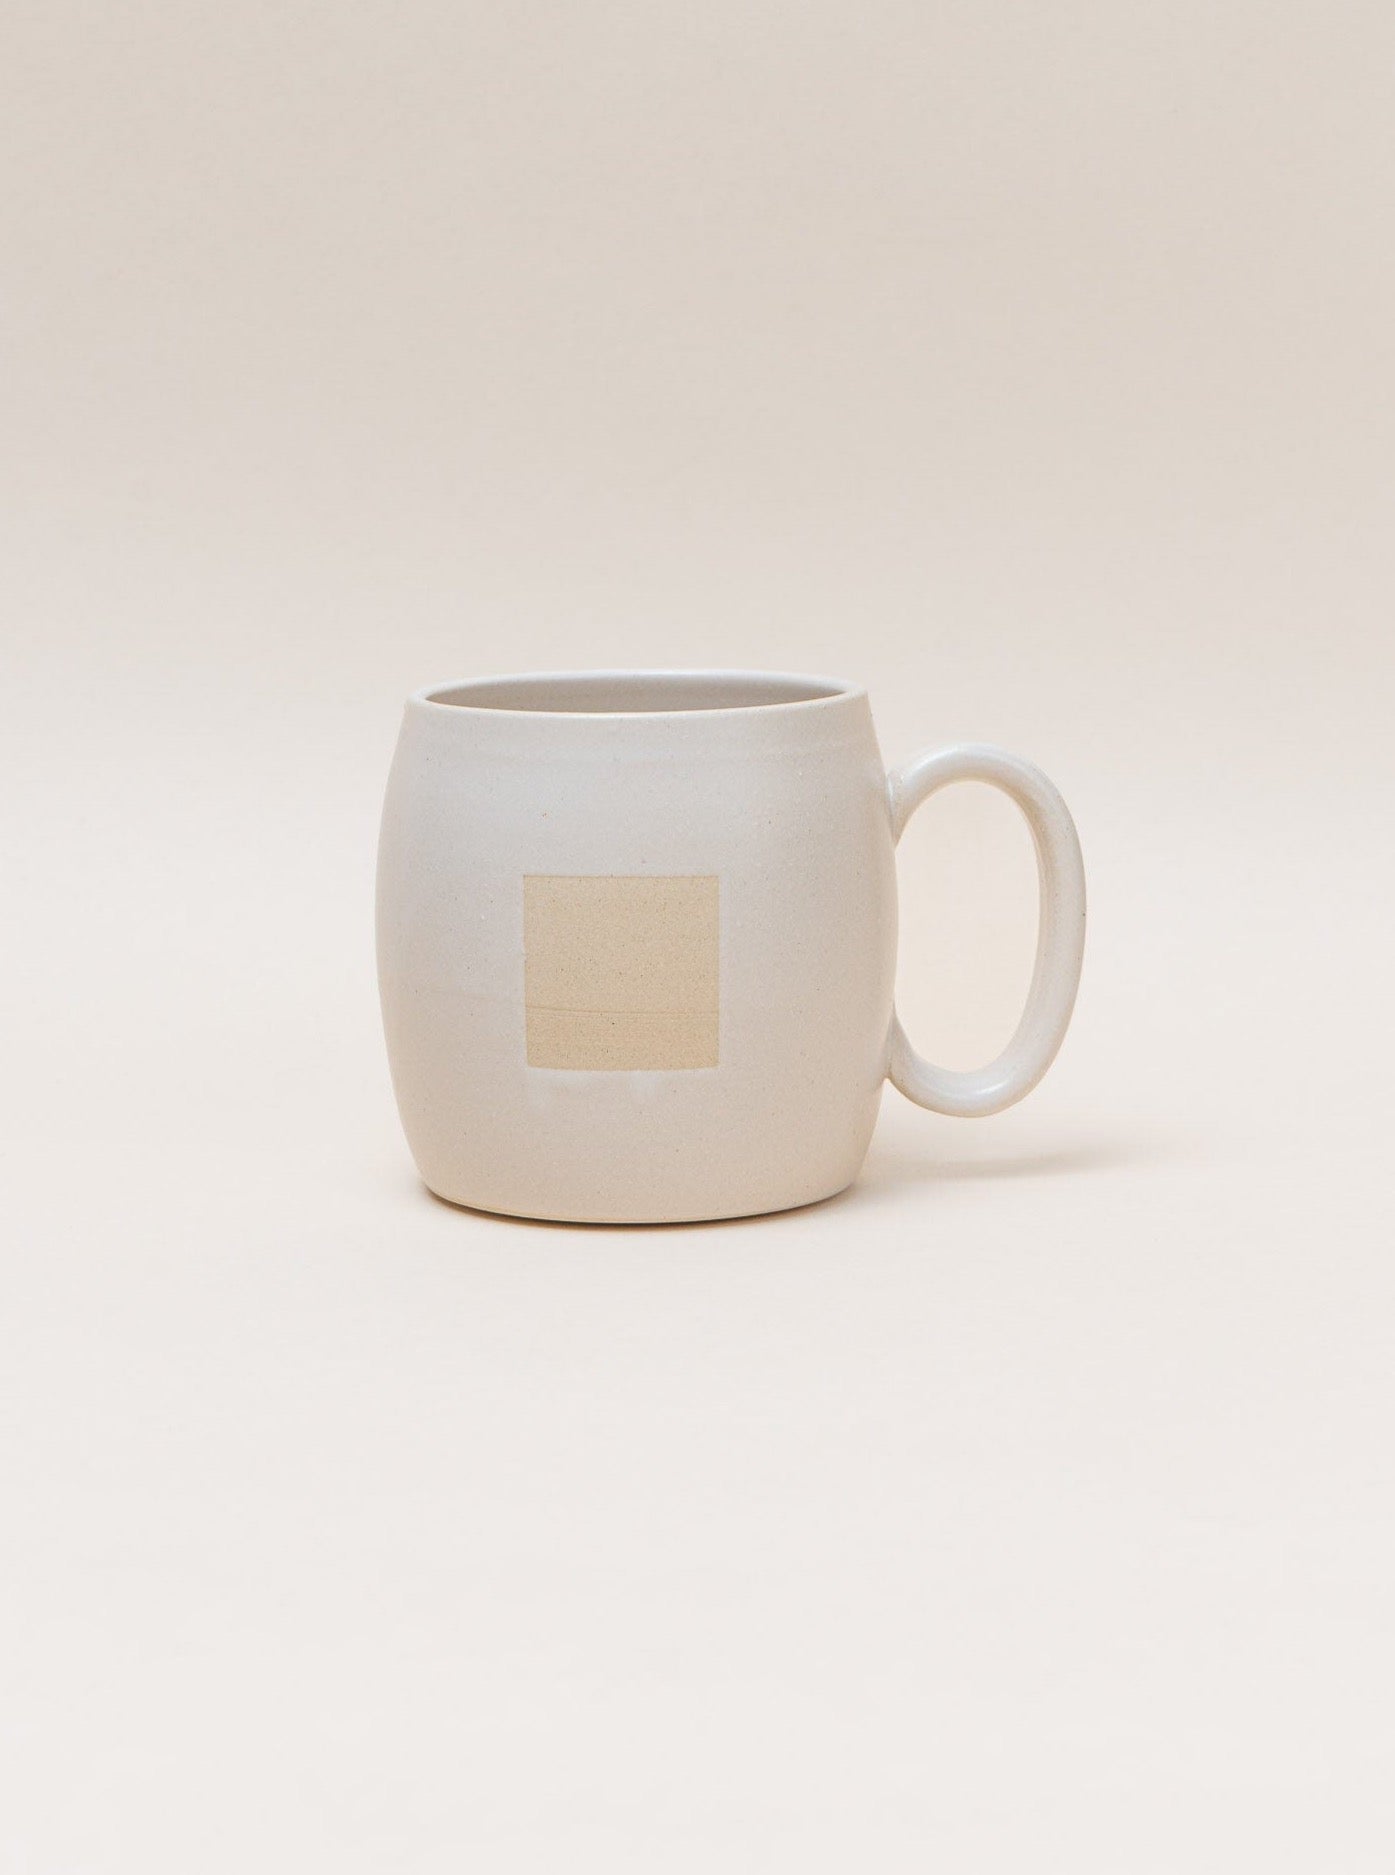 A Negative Space Mug - Cream handmade by a ceramic artist, featuring a square design.